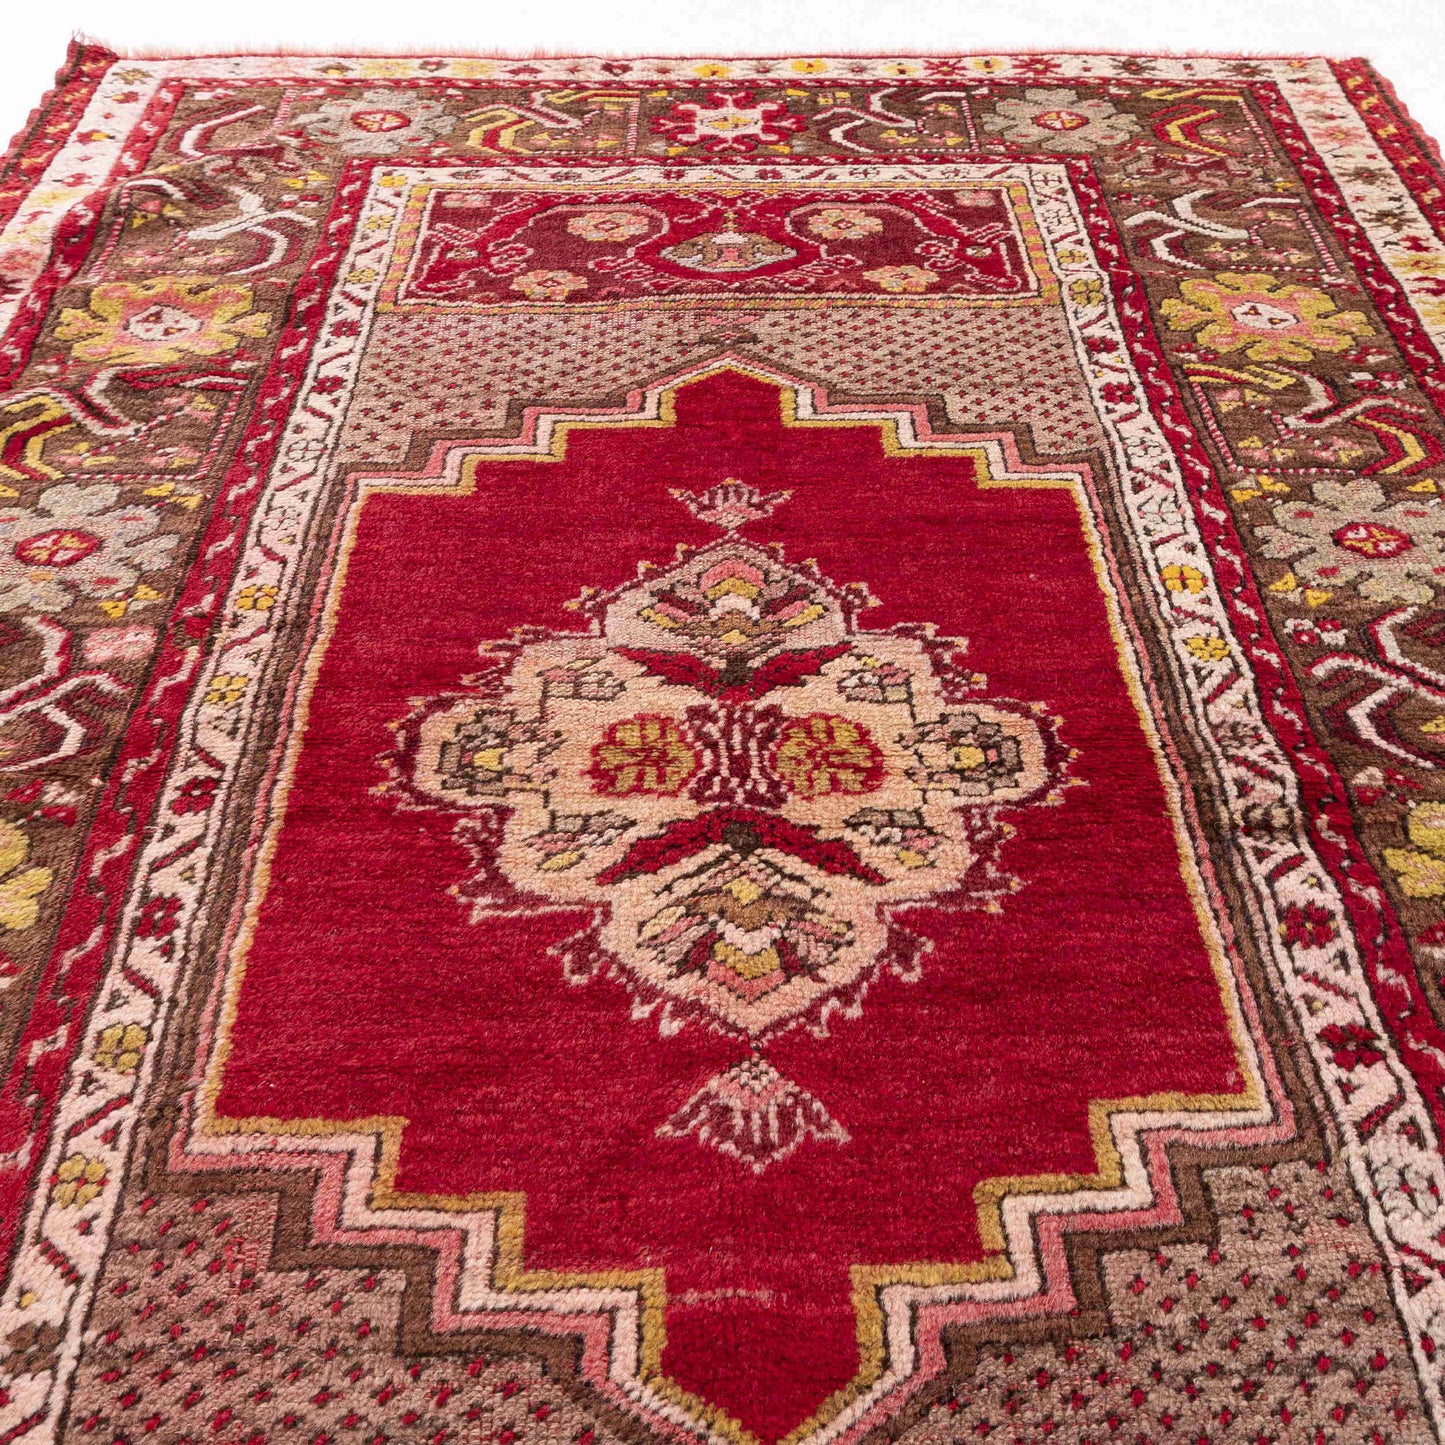 Oriental Rug Anatolian Handmade Wool On Wool 108 X 160 Cm - 3' 7'' X 5' 3'' Red C014 ER01